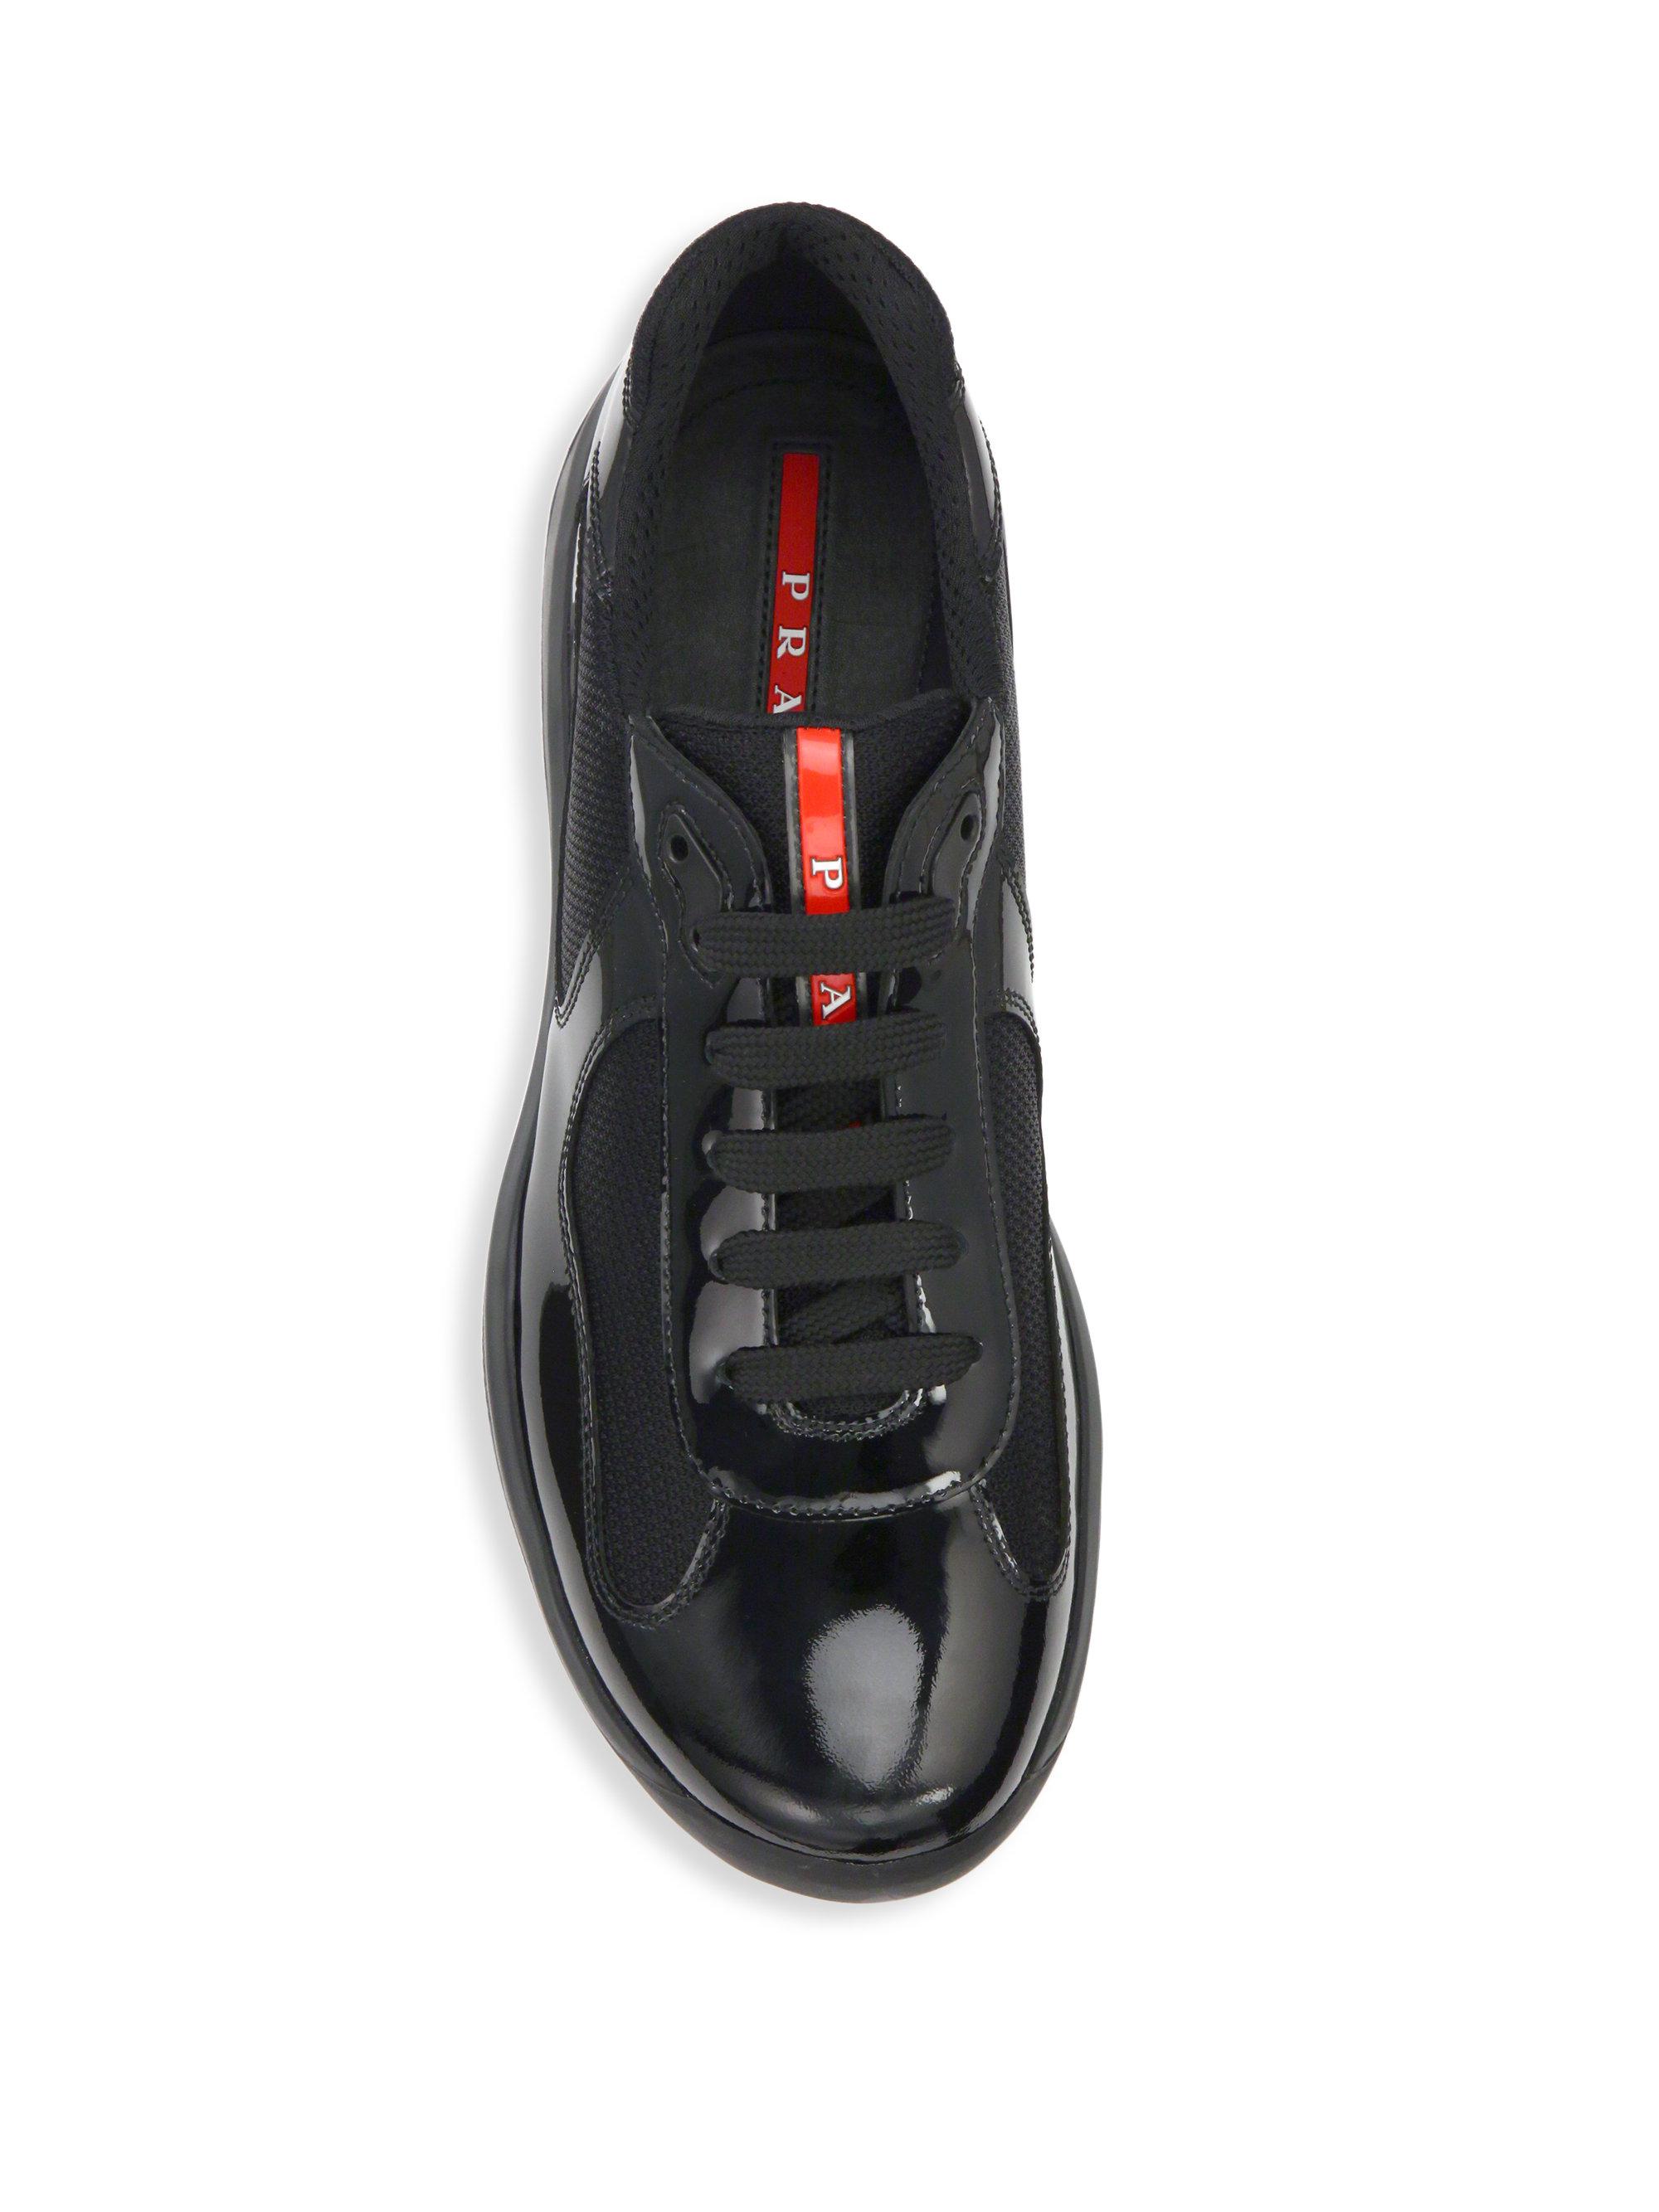 Black Patent Leather Sneakers Spain, SAVE 37% horiconphoenix.com